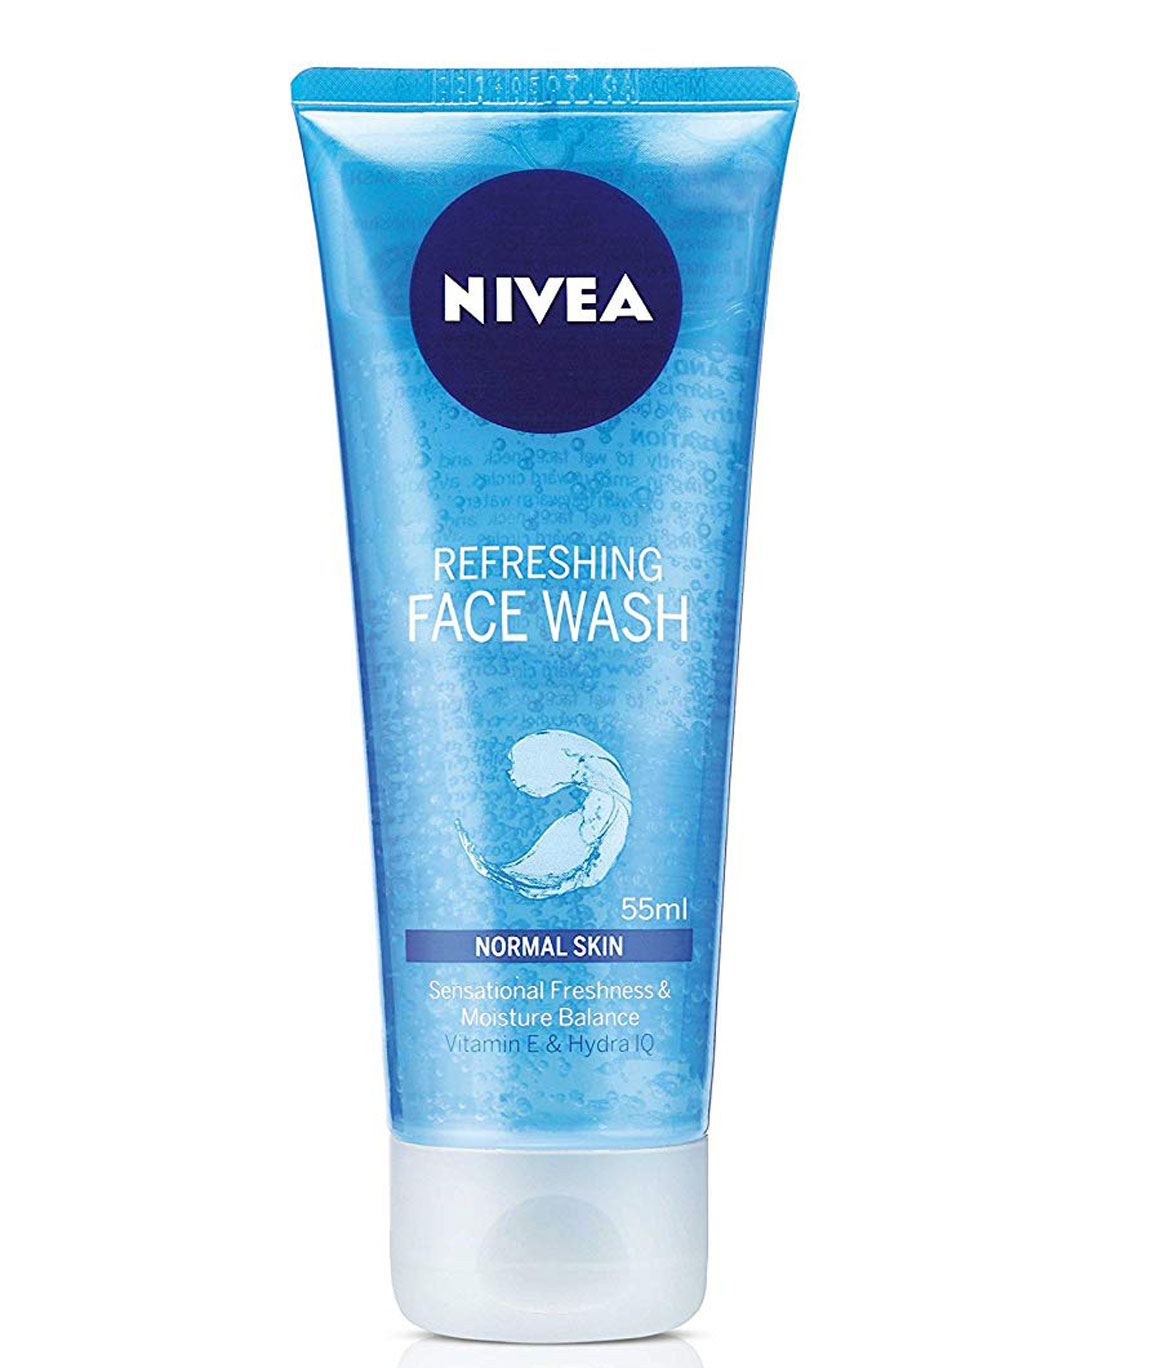 Nivea Refreshing Facewash, 55ml